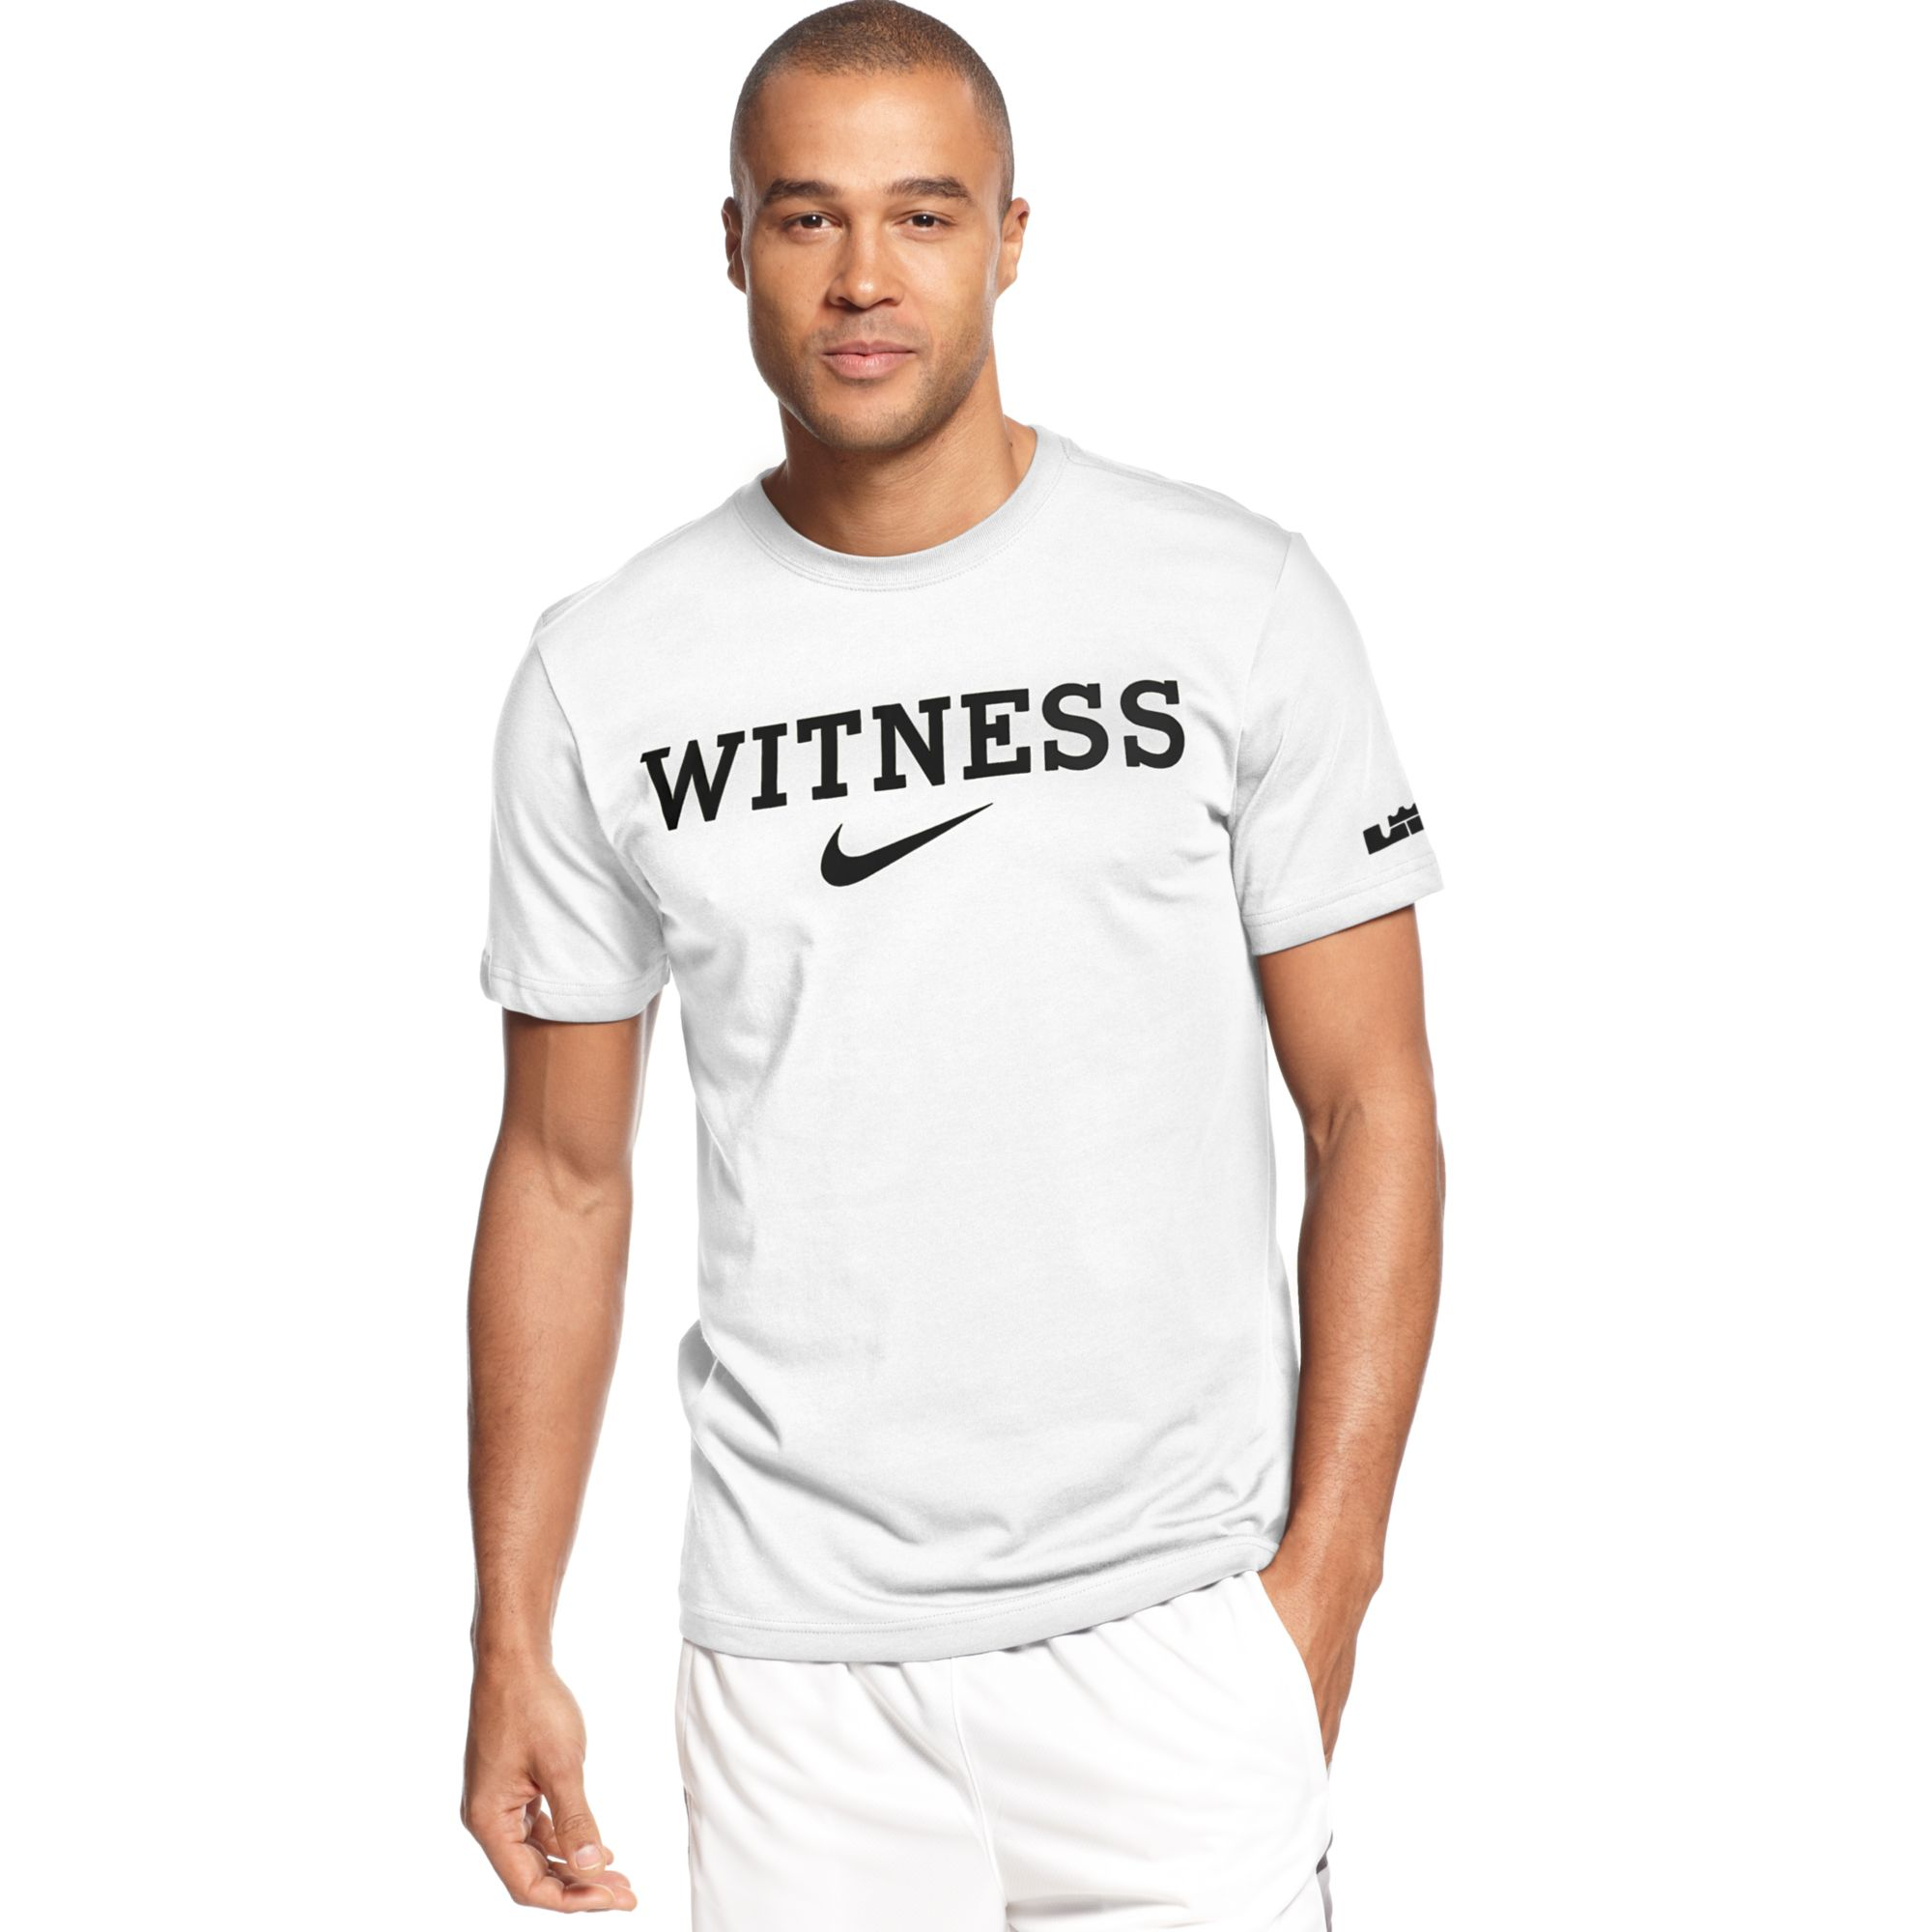 witness t shirt nike